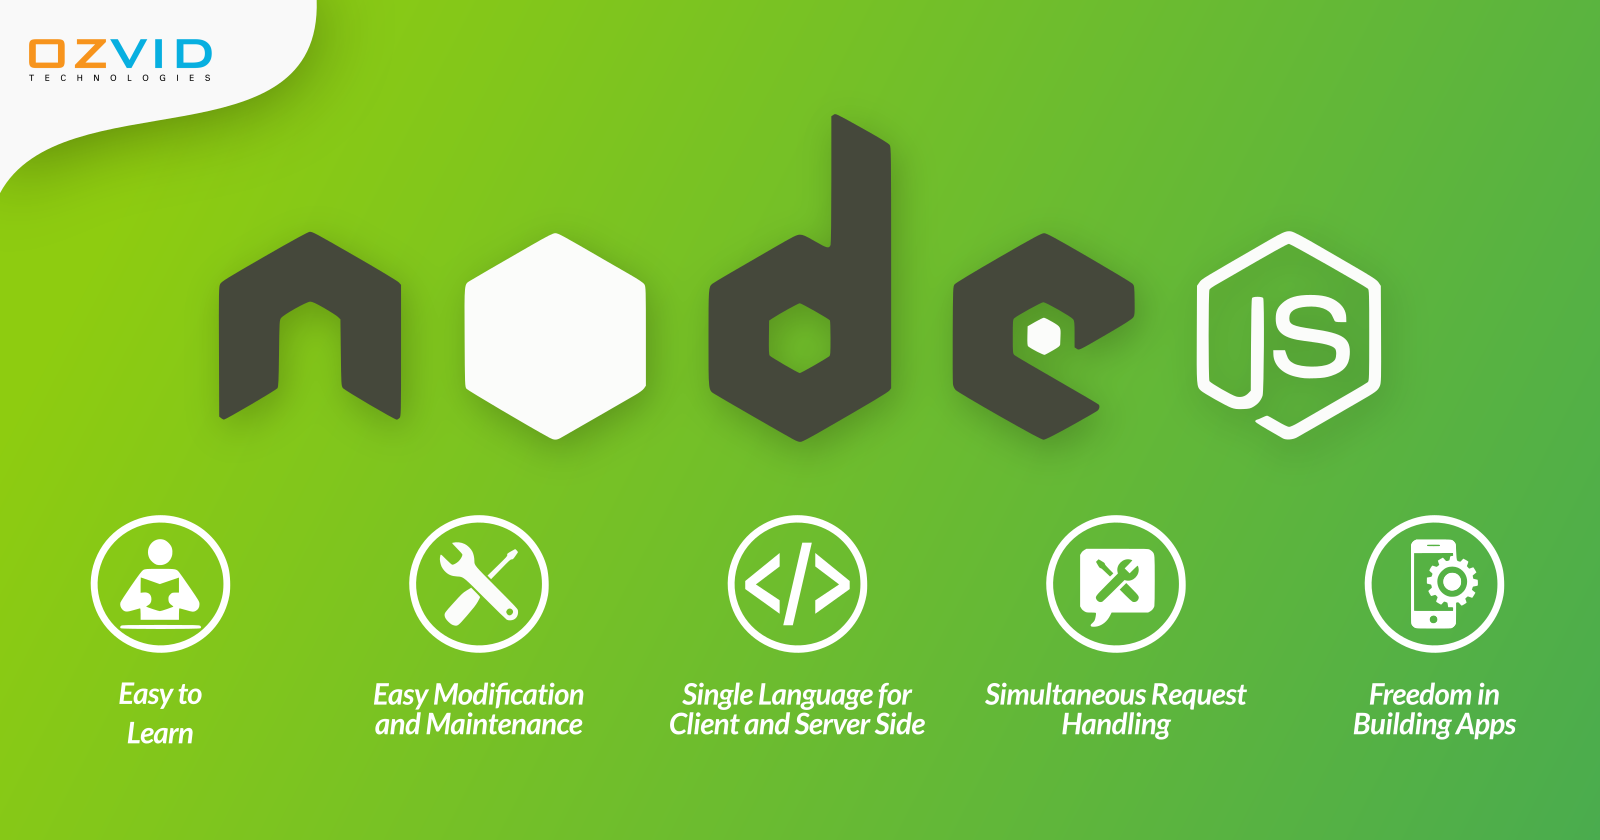 Why Choose NodeJS for Web App Development?